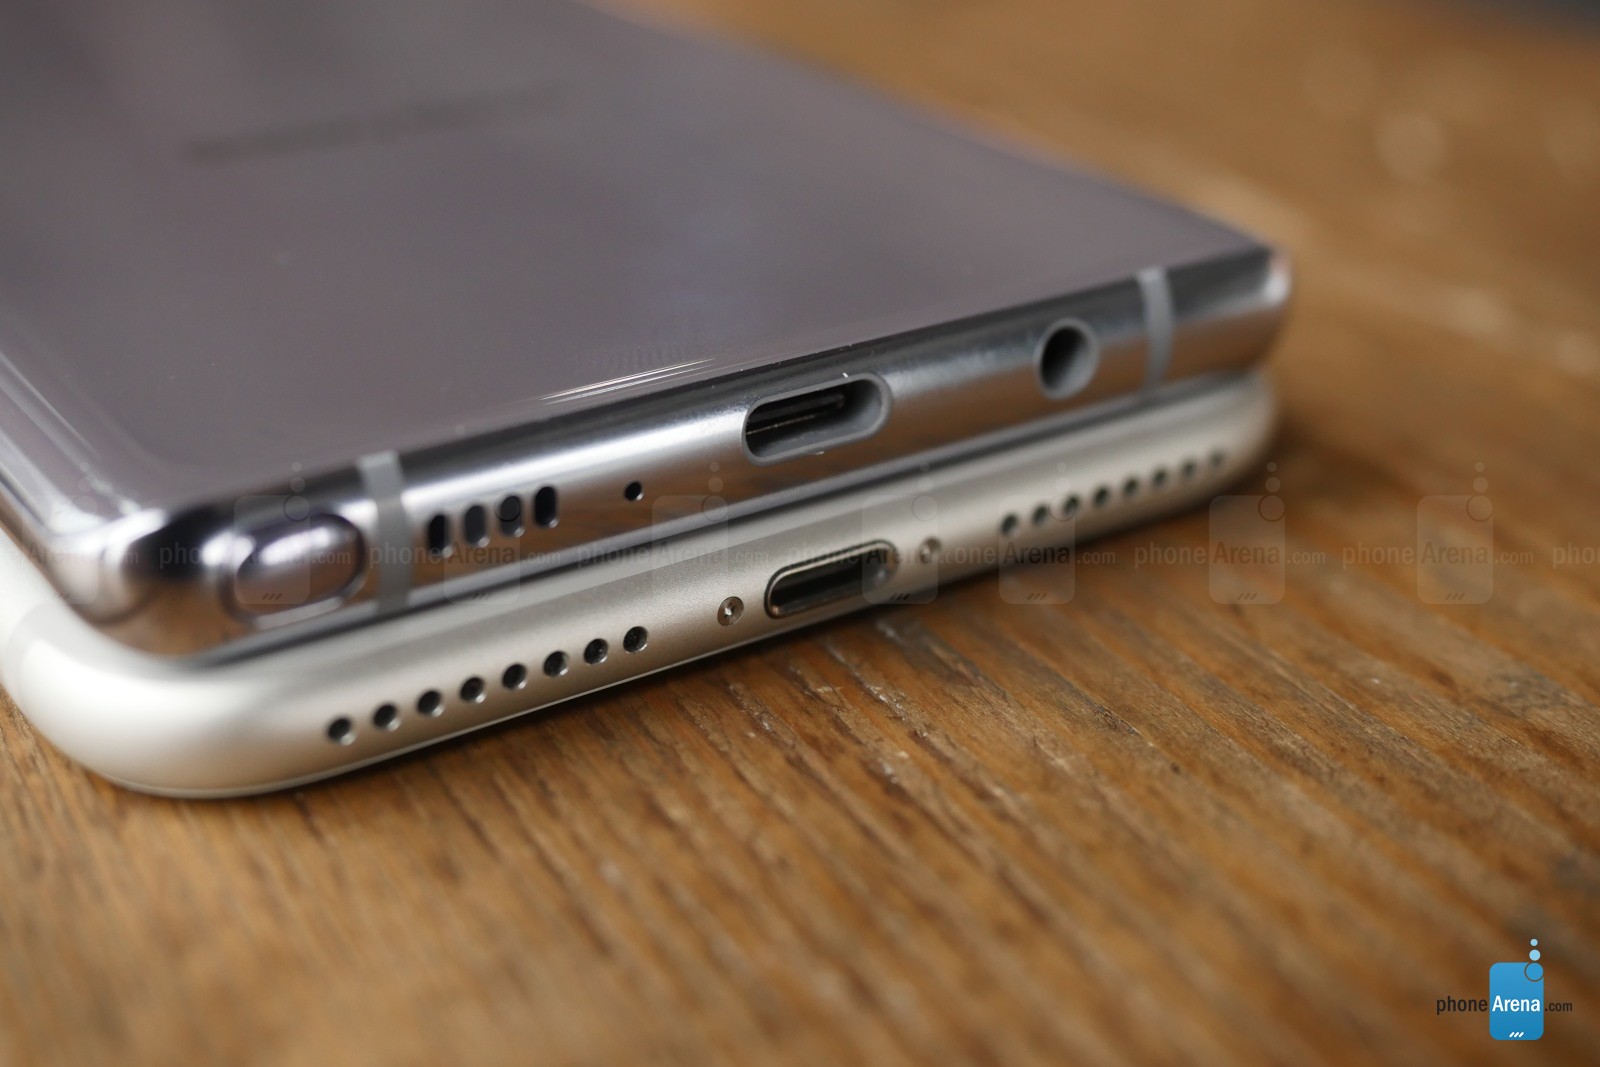 Comparatif Samsung Galaxy Note 8 iPhone 7 Plus 4